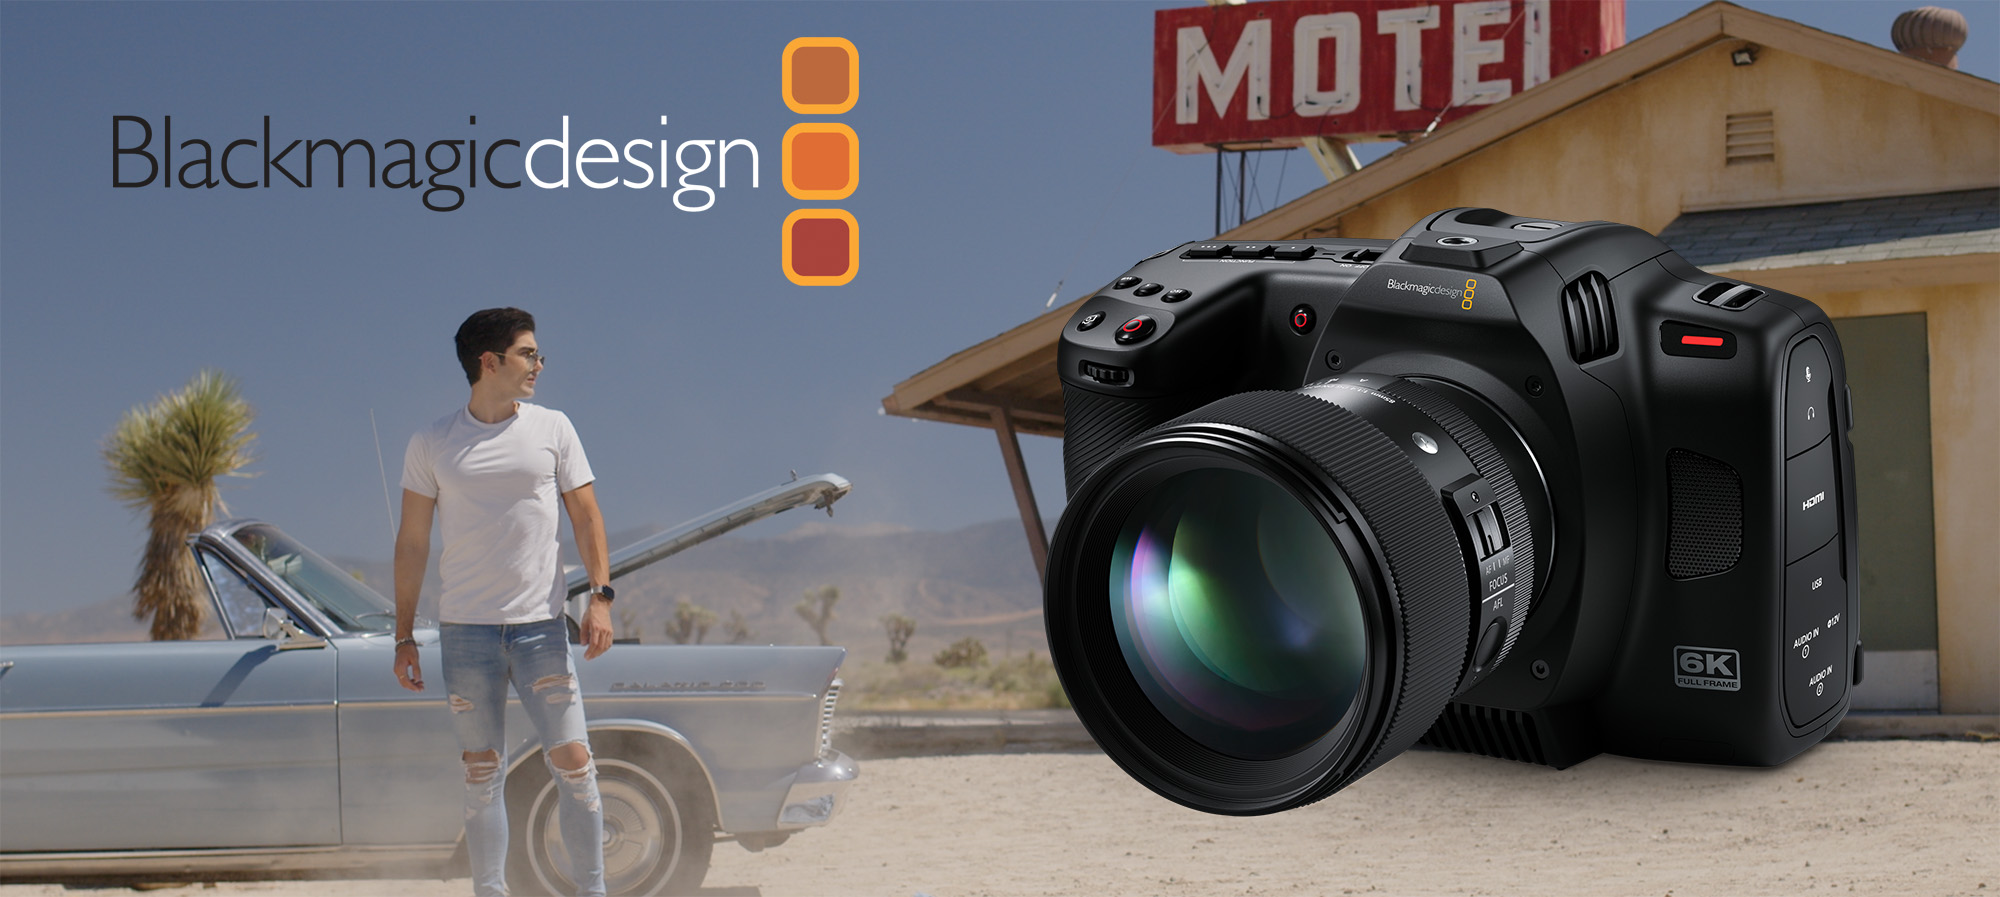 Review: Blackmagic Cinema Camera 6K - Blackmagic Design Expands Its Cinema Camera Lineup 1